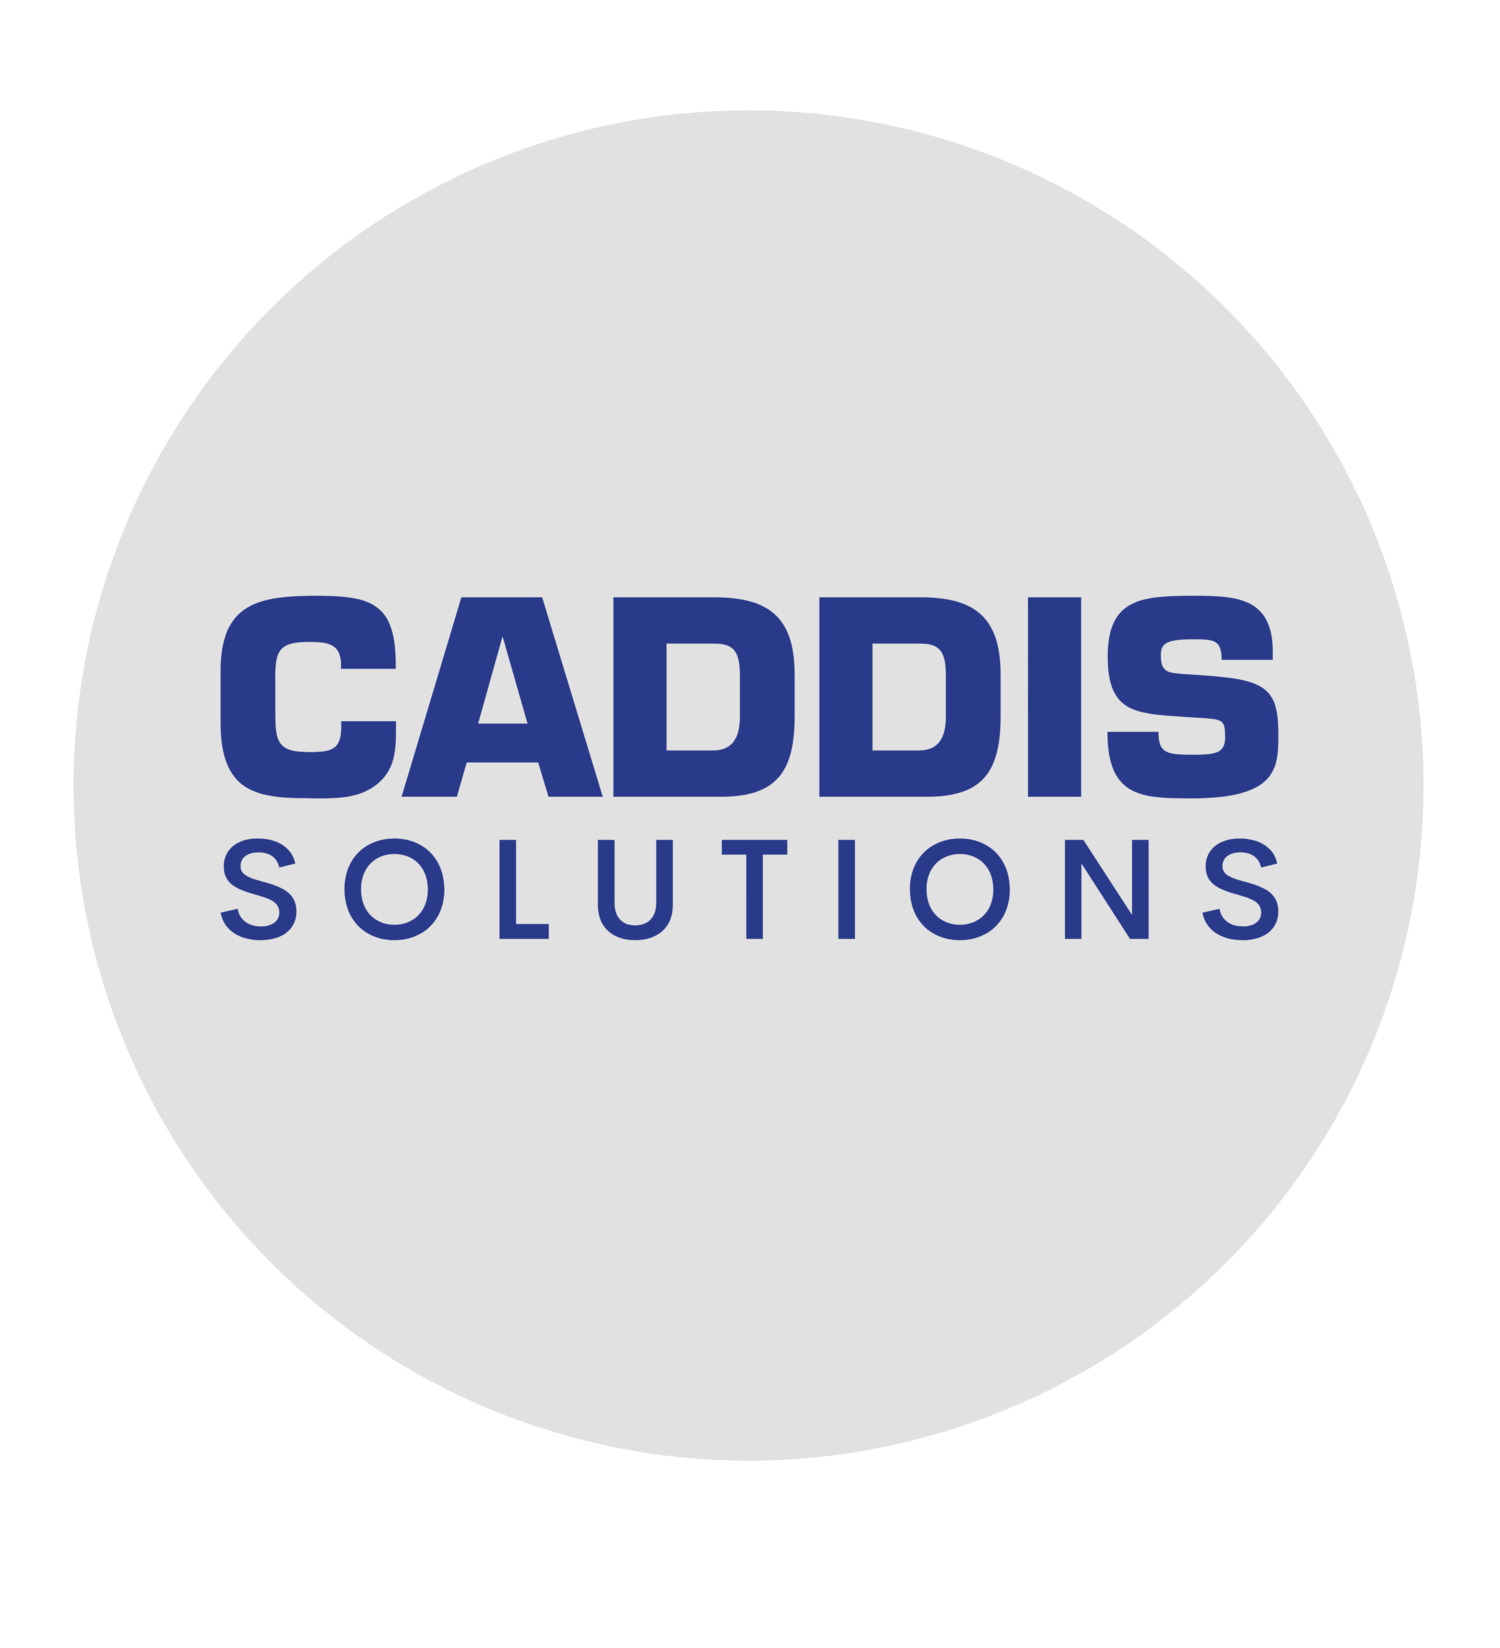 CADDIS Solutions